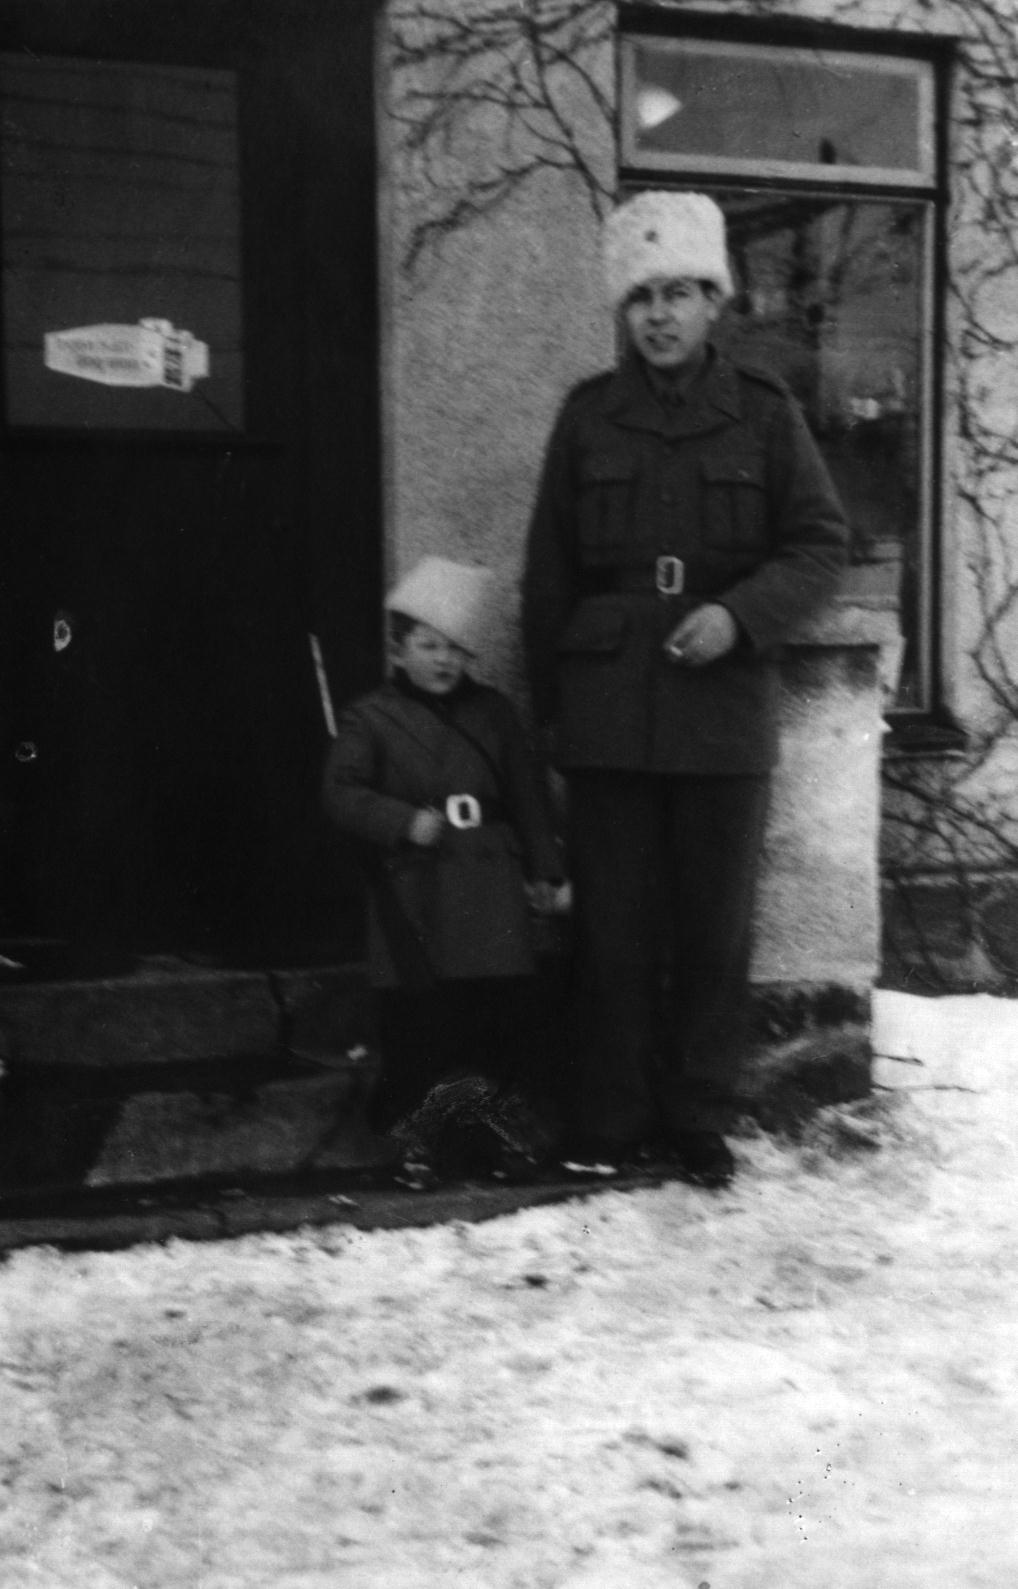 Lanthandlaren Erik Persson med sonen Jörgen, kring 1940